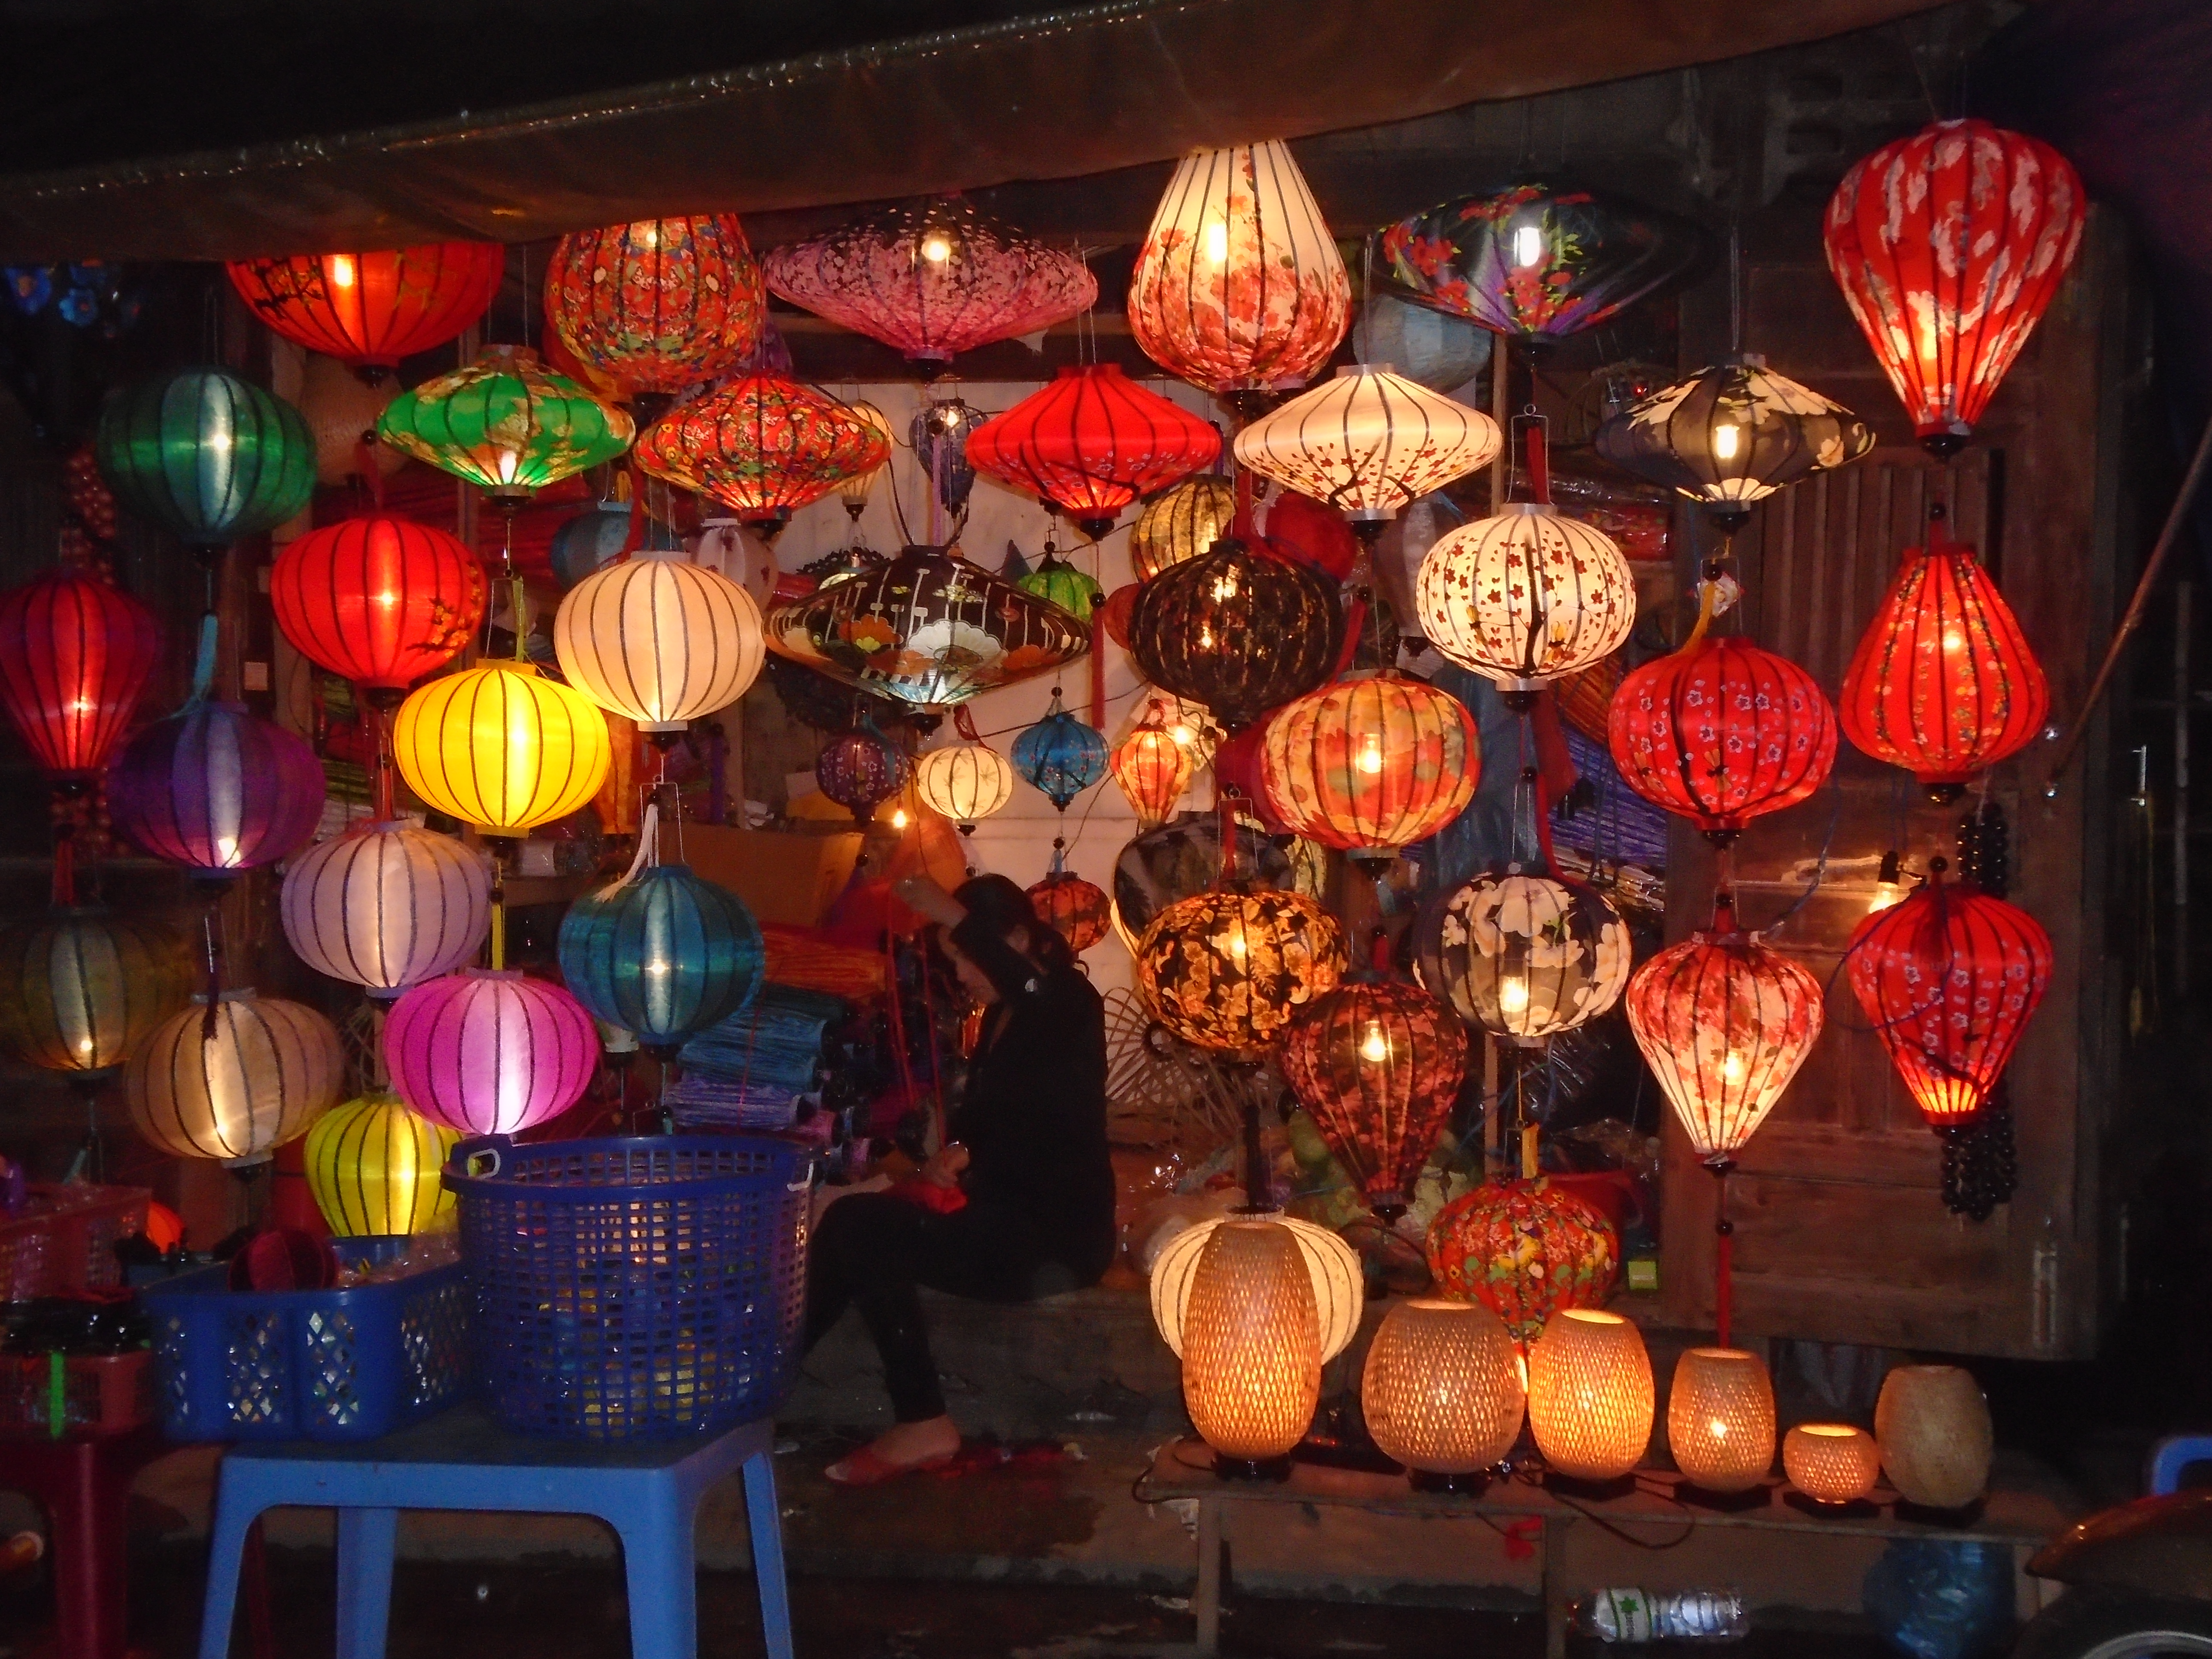 Free Image, hoi an, lantern, vietnam, red, asia, nice, lighting, tradition, mid autumn festival, bazaar, fete, balloon 5152x3864